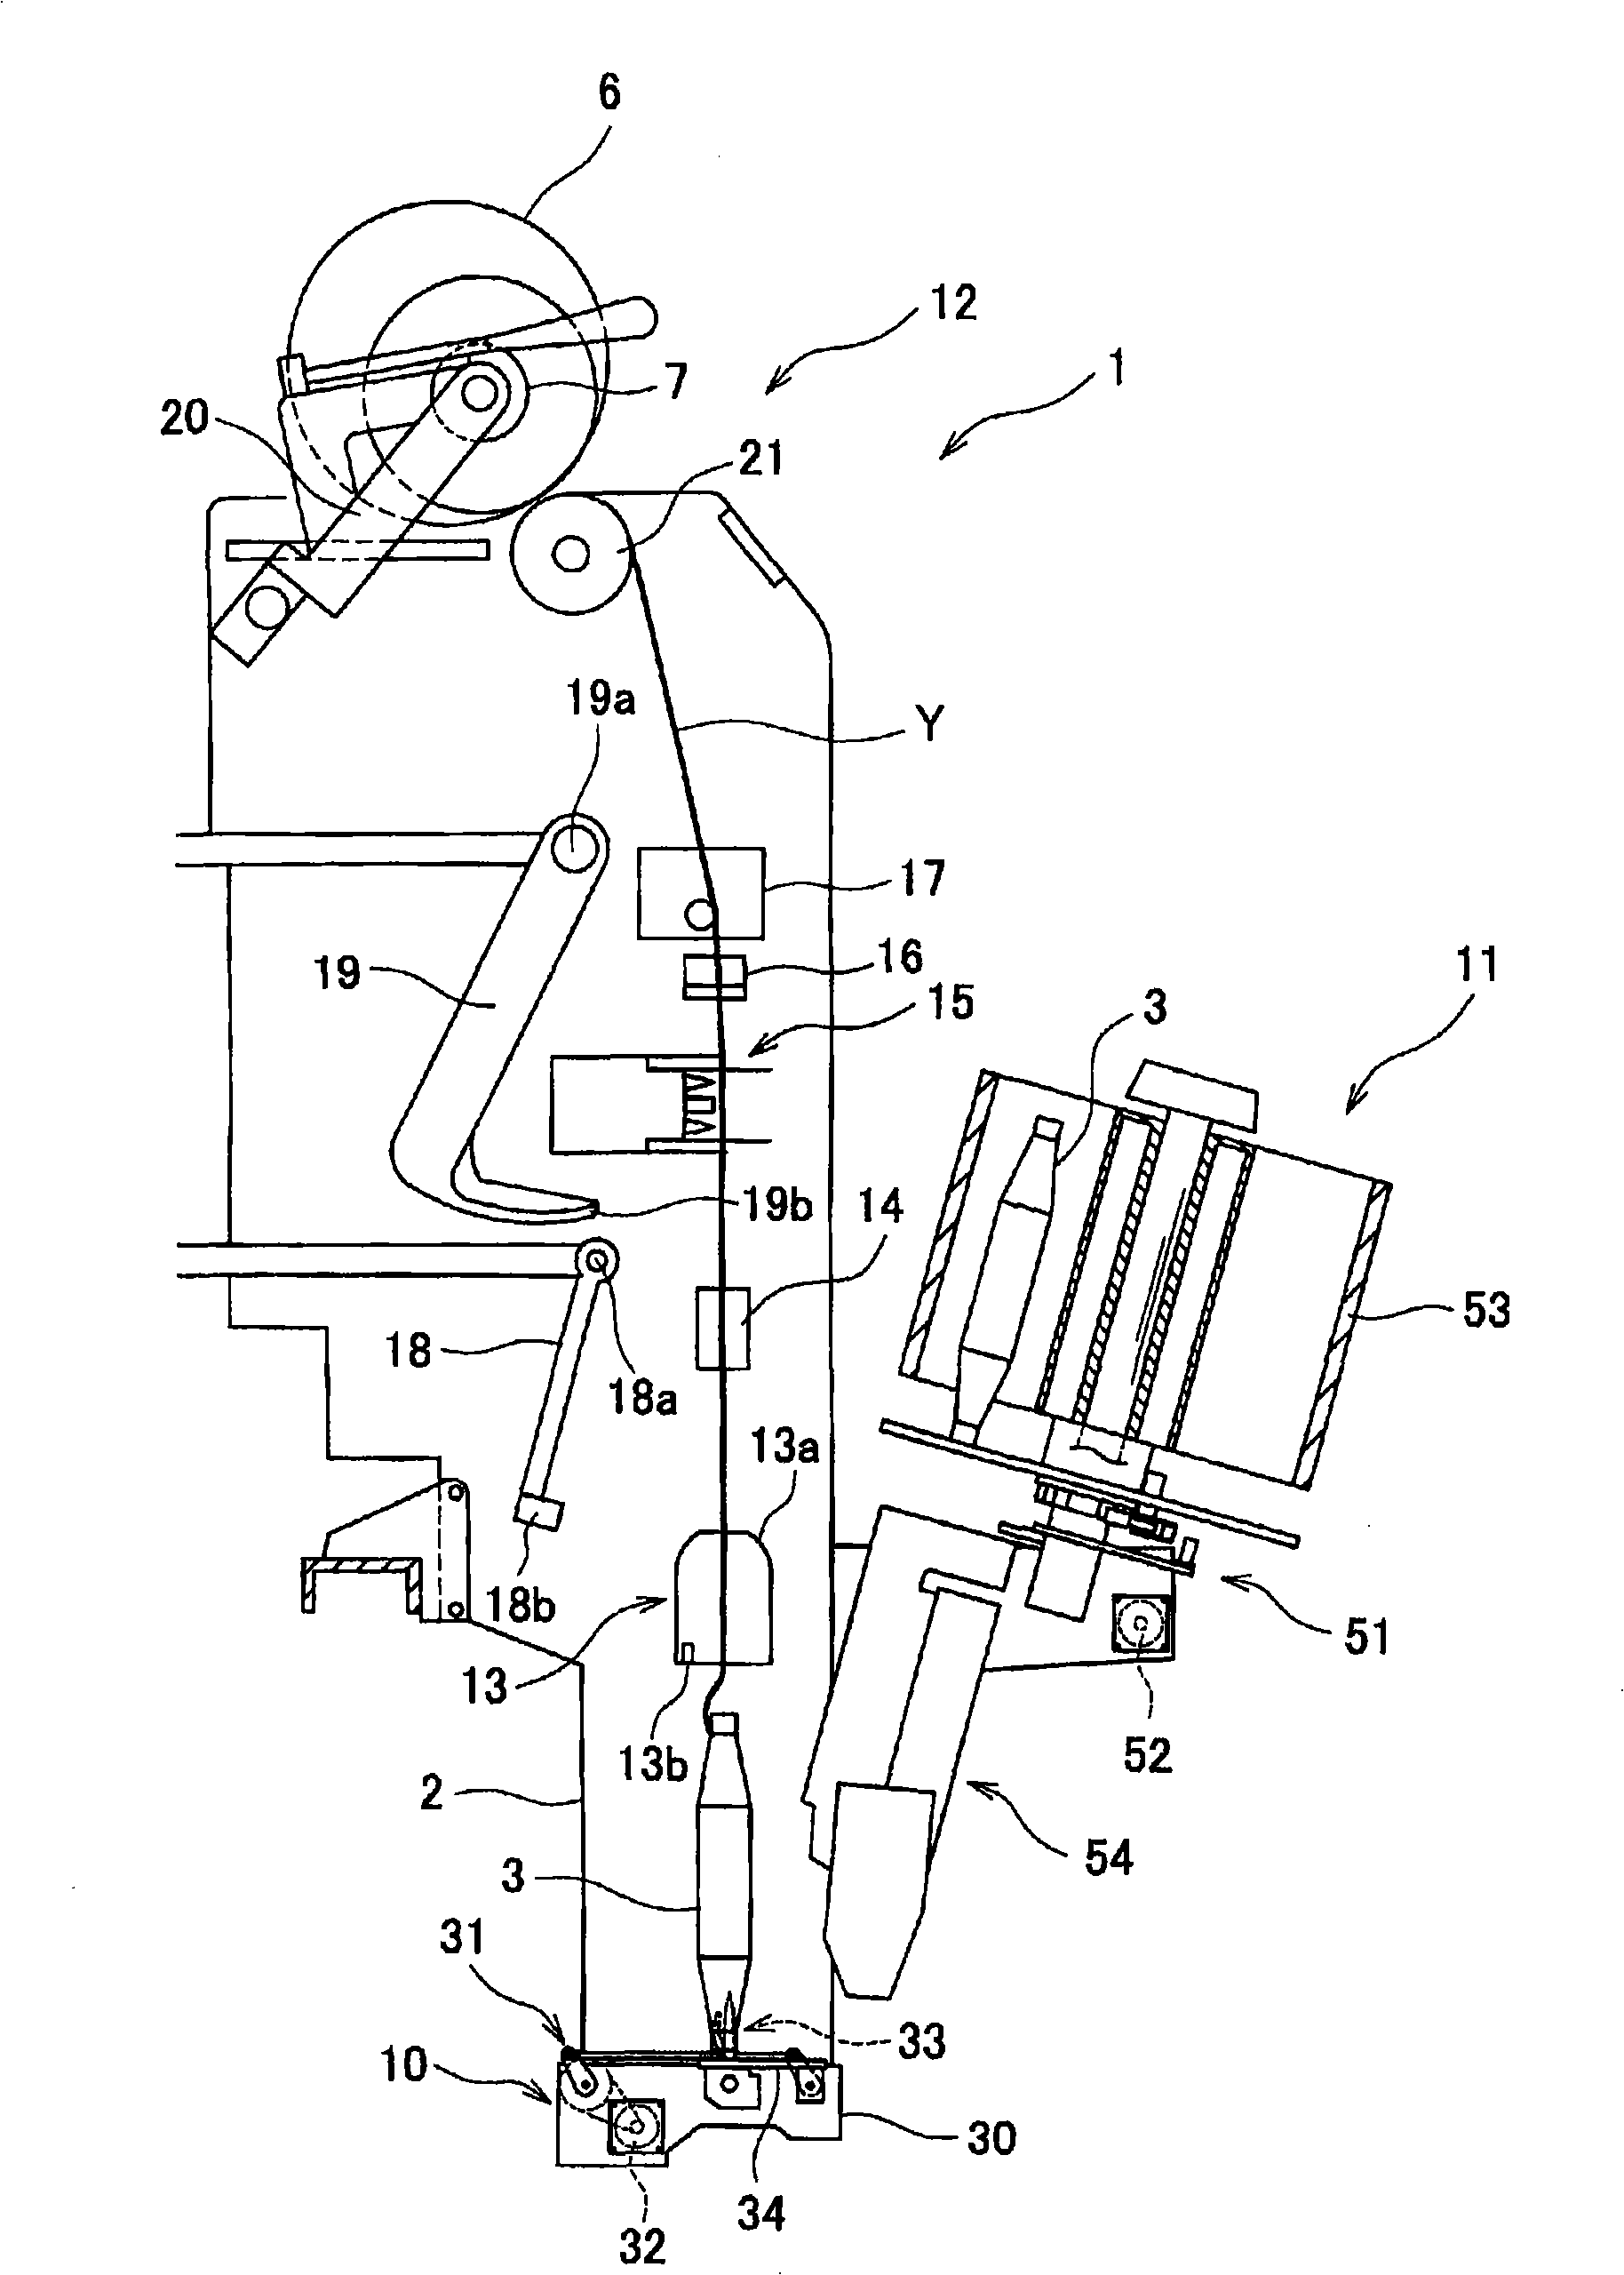 Yarn winding device and textile machine